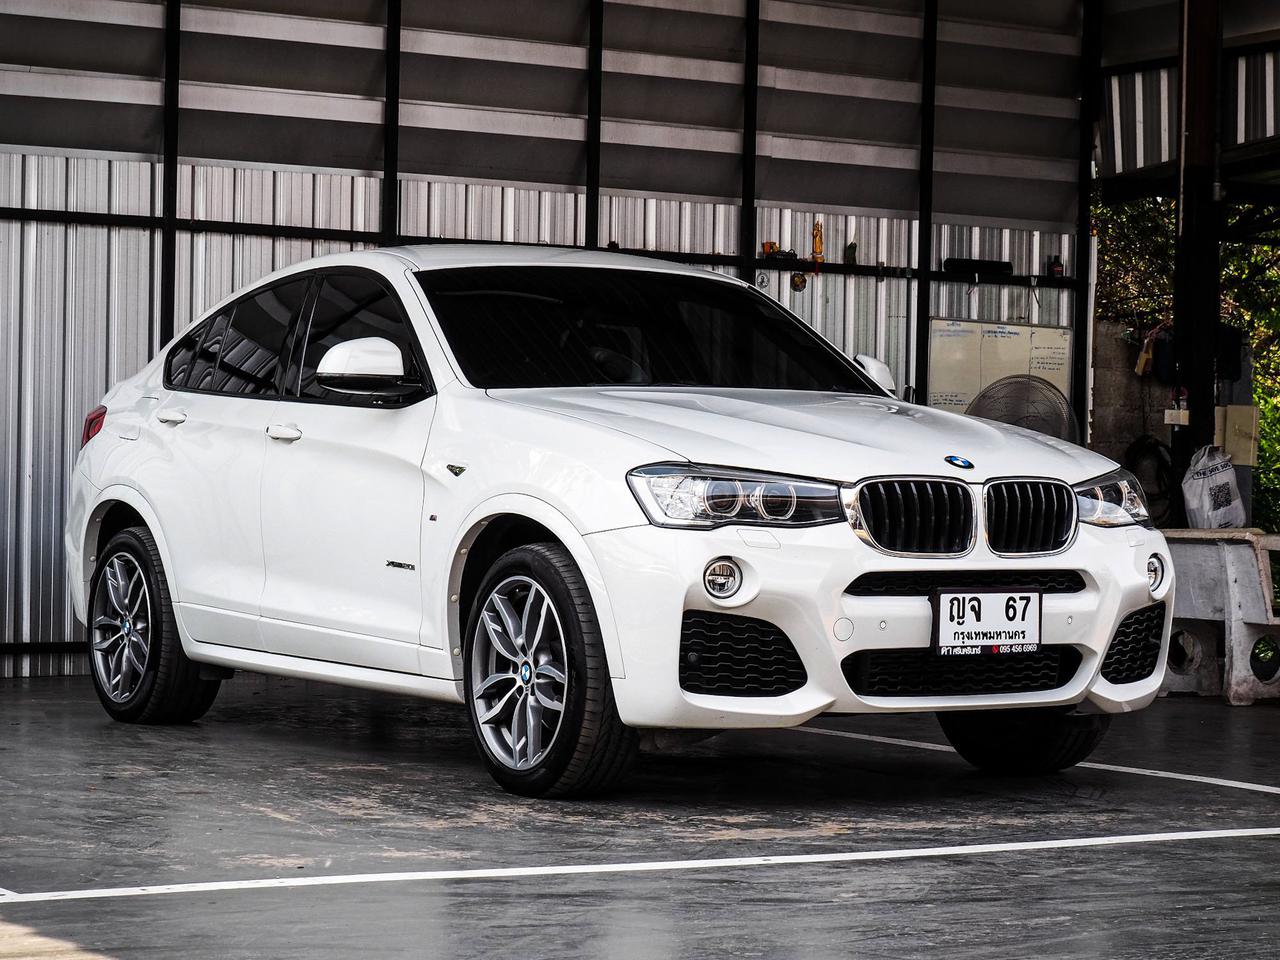 BMW X4 2.0 M Sport เบนซิน ปี 2019 สีขาว รุ่น Top สุด M Sport แท้ จากศูนย์ BMW รูปเล็กที่ 1